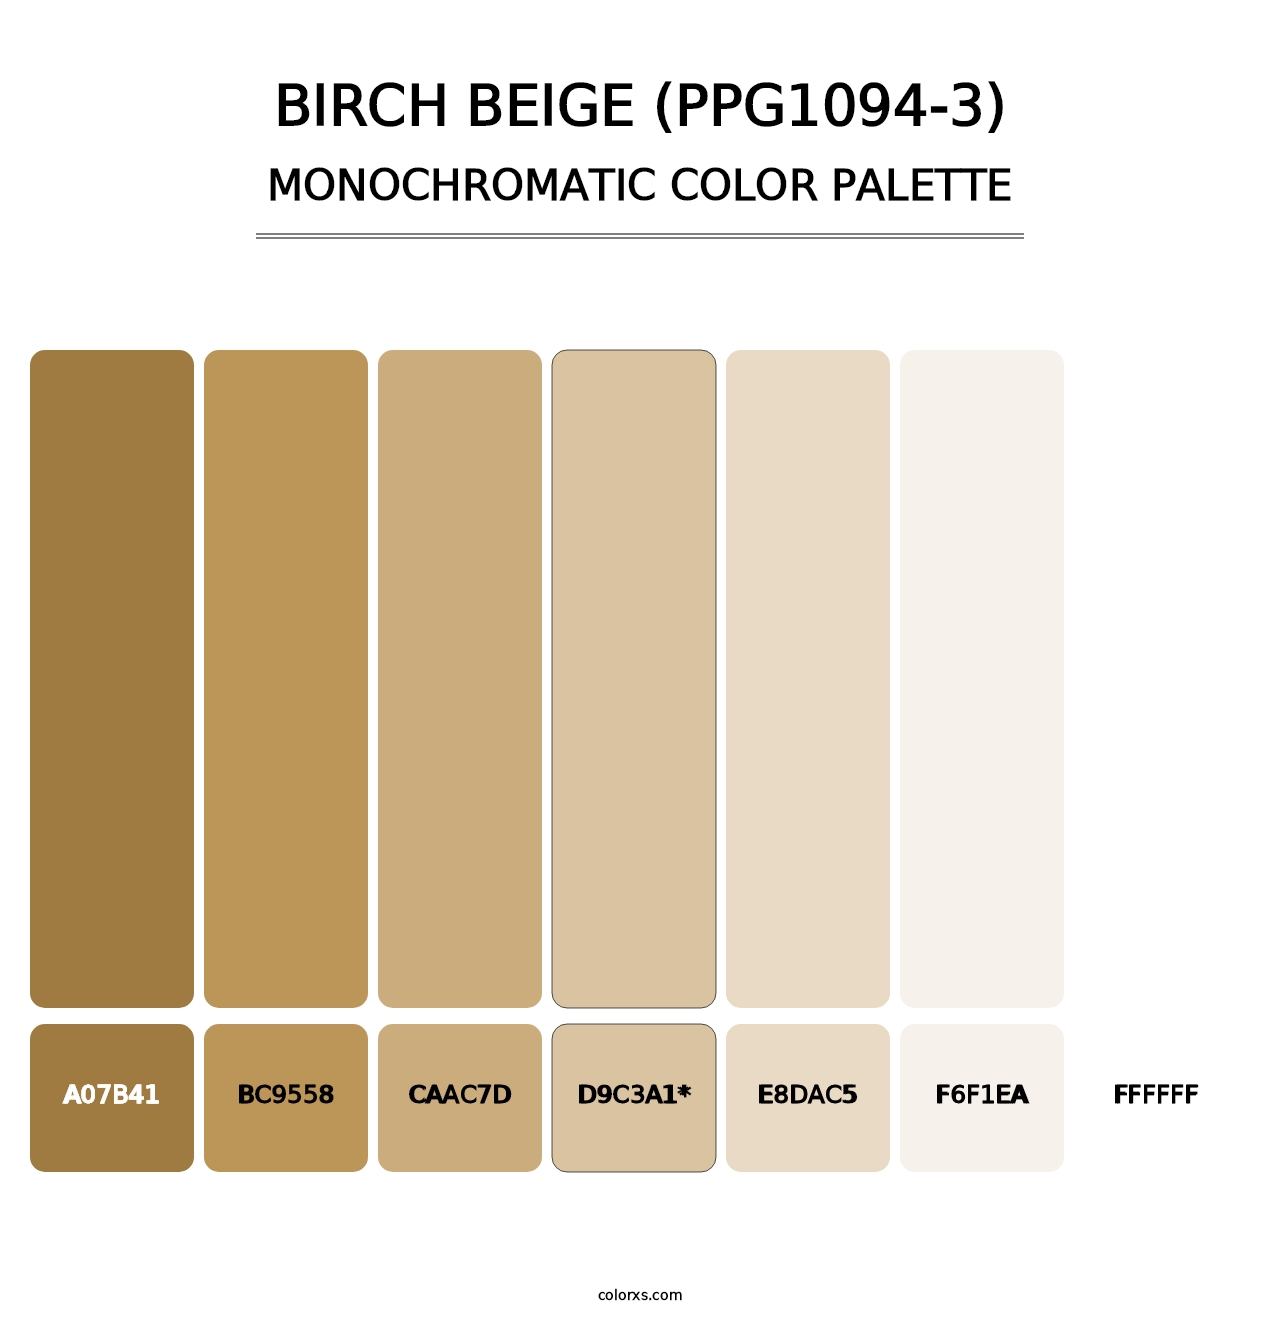 Birch Beige (PPG1094-3) - Monochromatic Color Palette